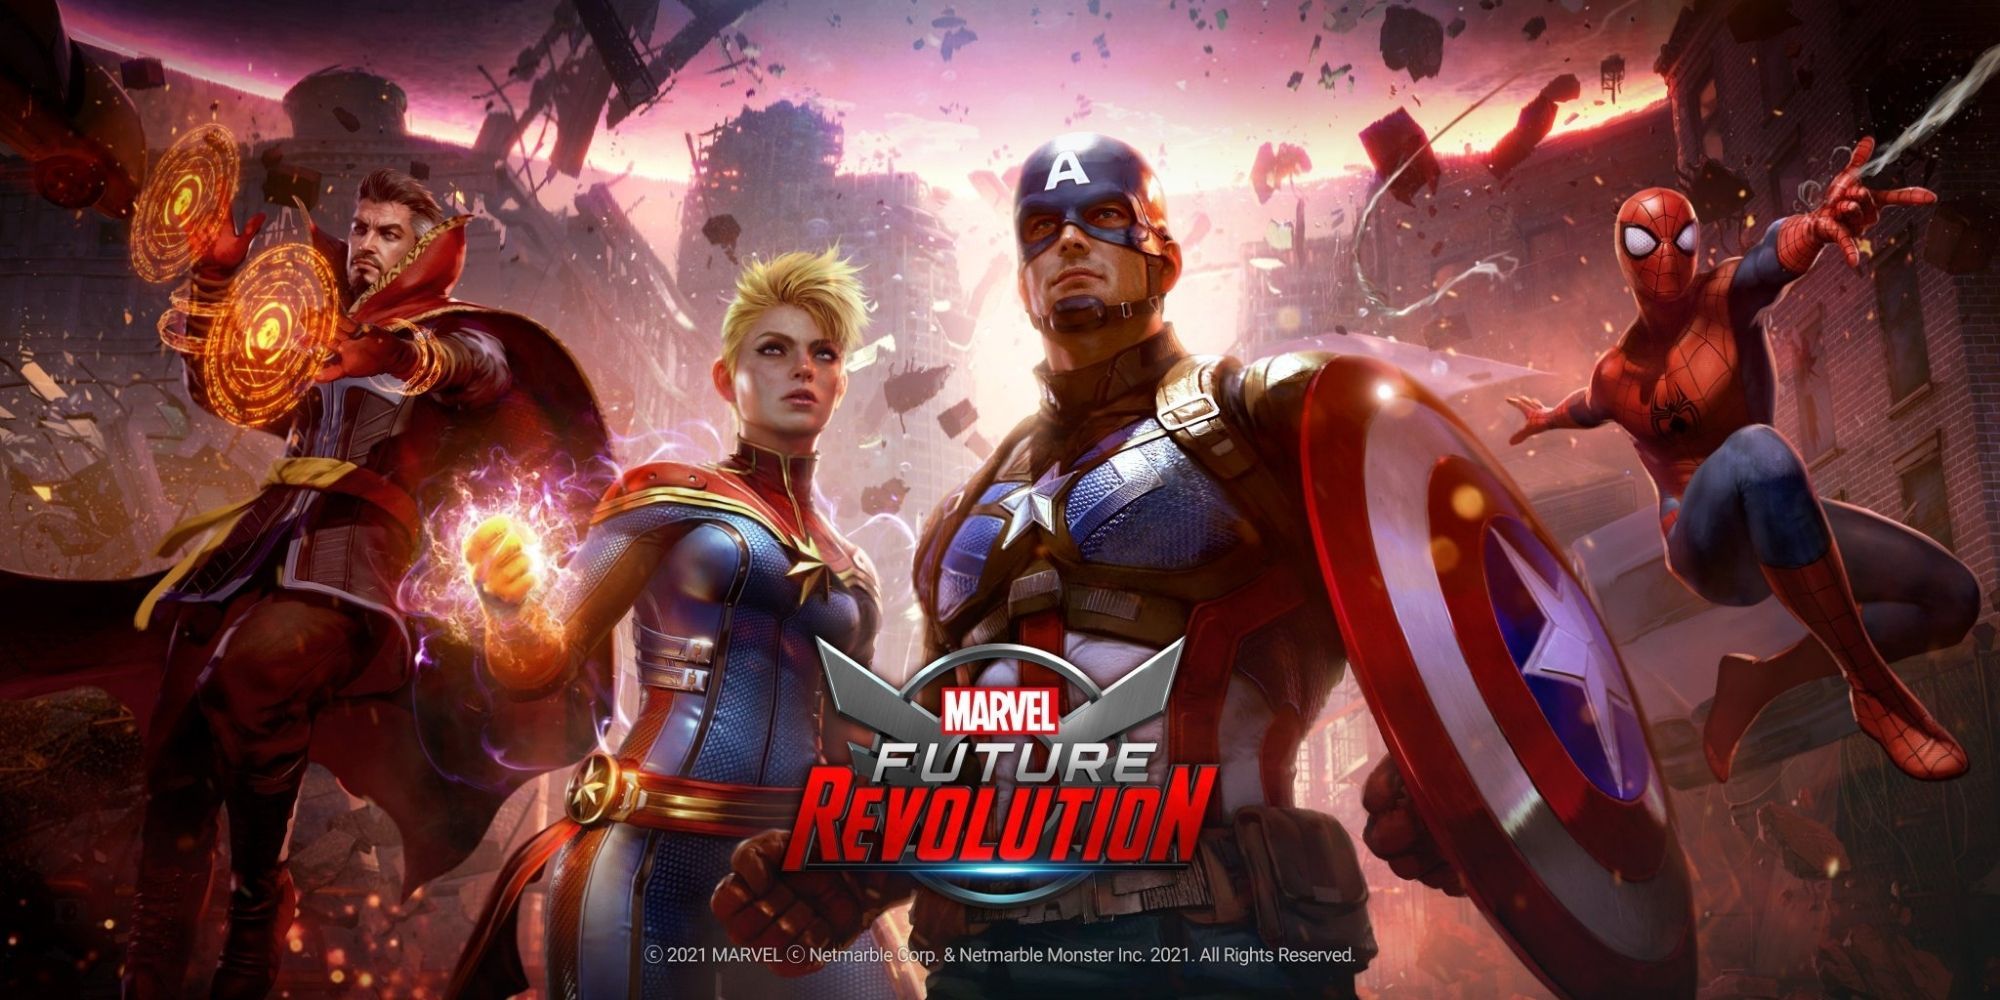 Character stills of Doctor Strange, Captain Marvel, Captain America, and Spider-Man from the Marvel Future Revolution game.